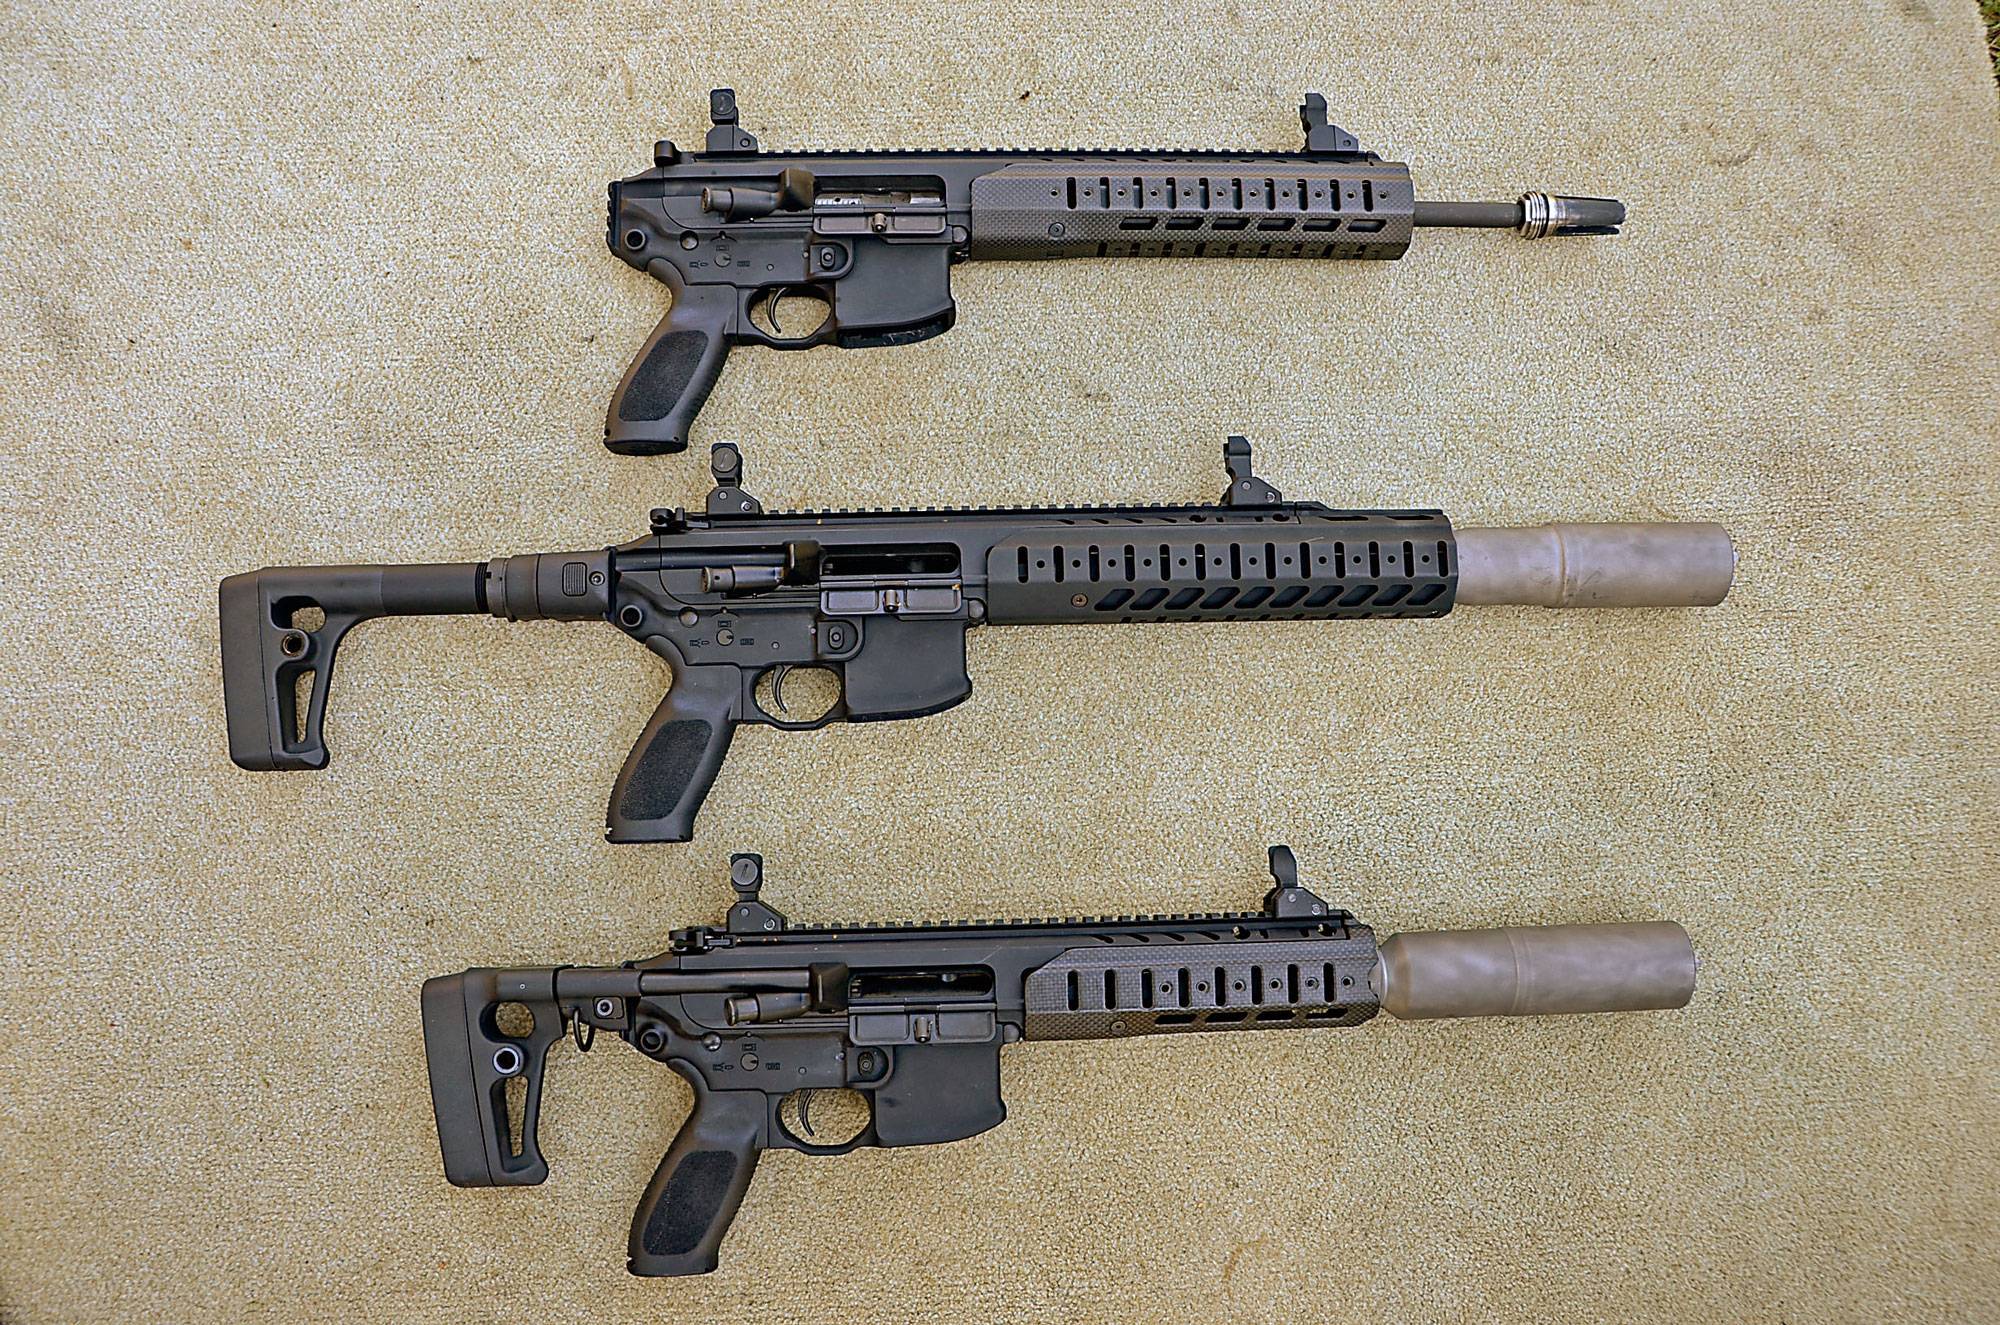 Sig sauer mcx винтовка штурмовая — характеристики, обзор, фото